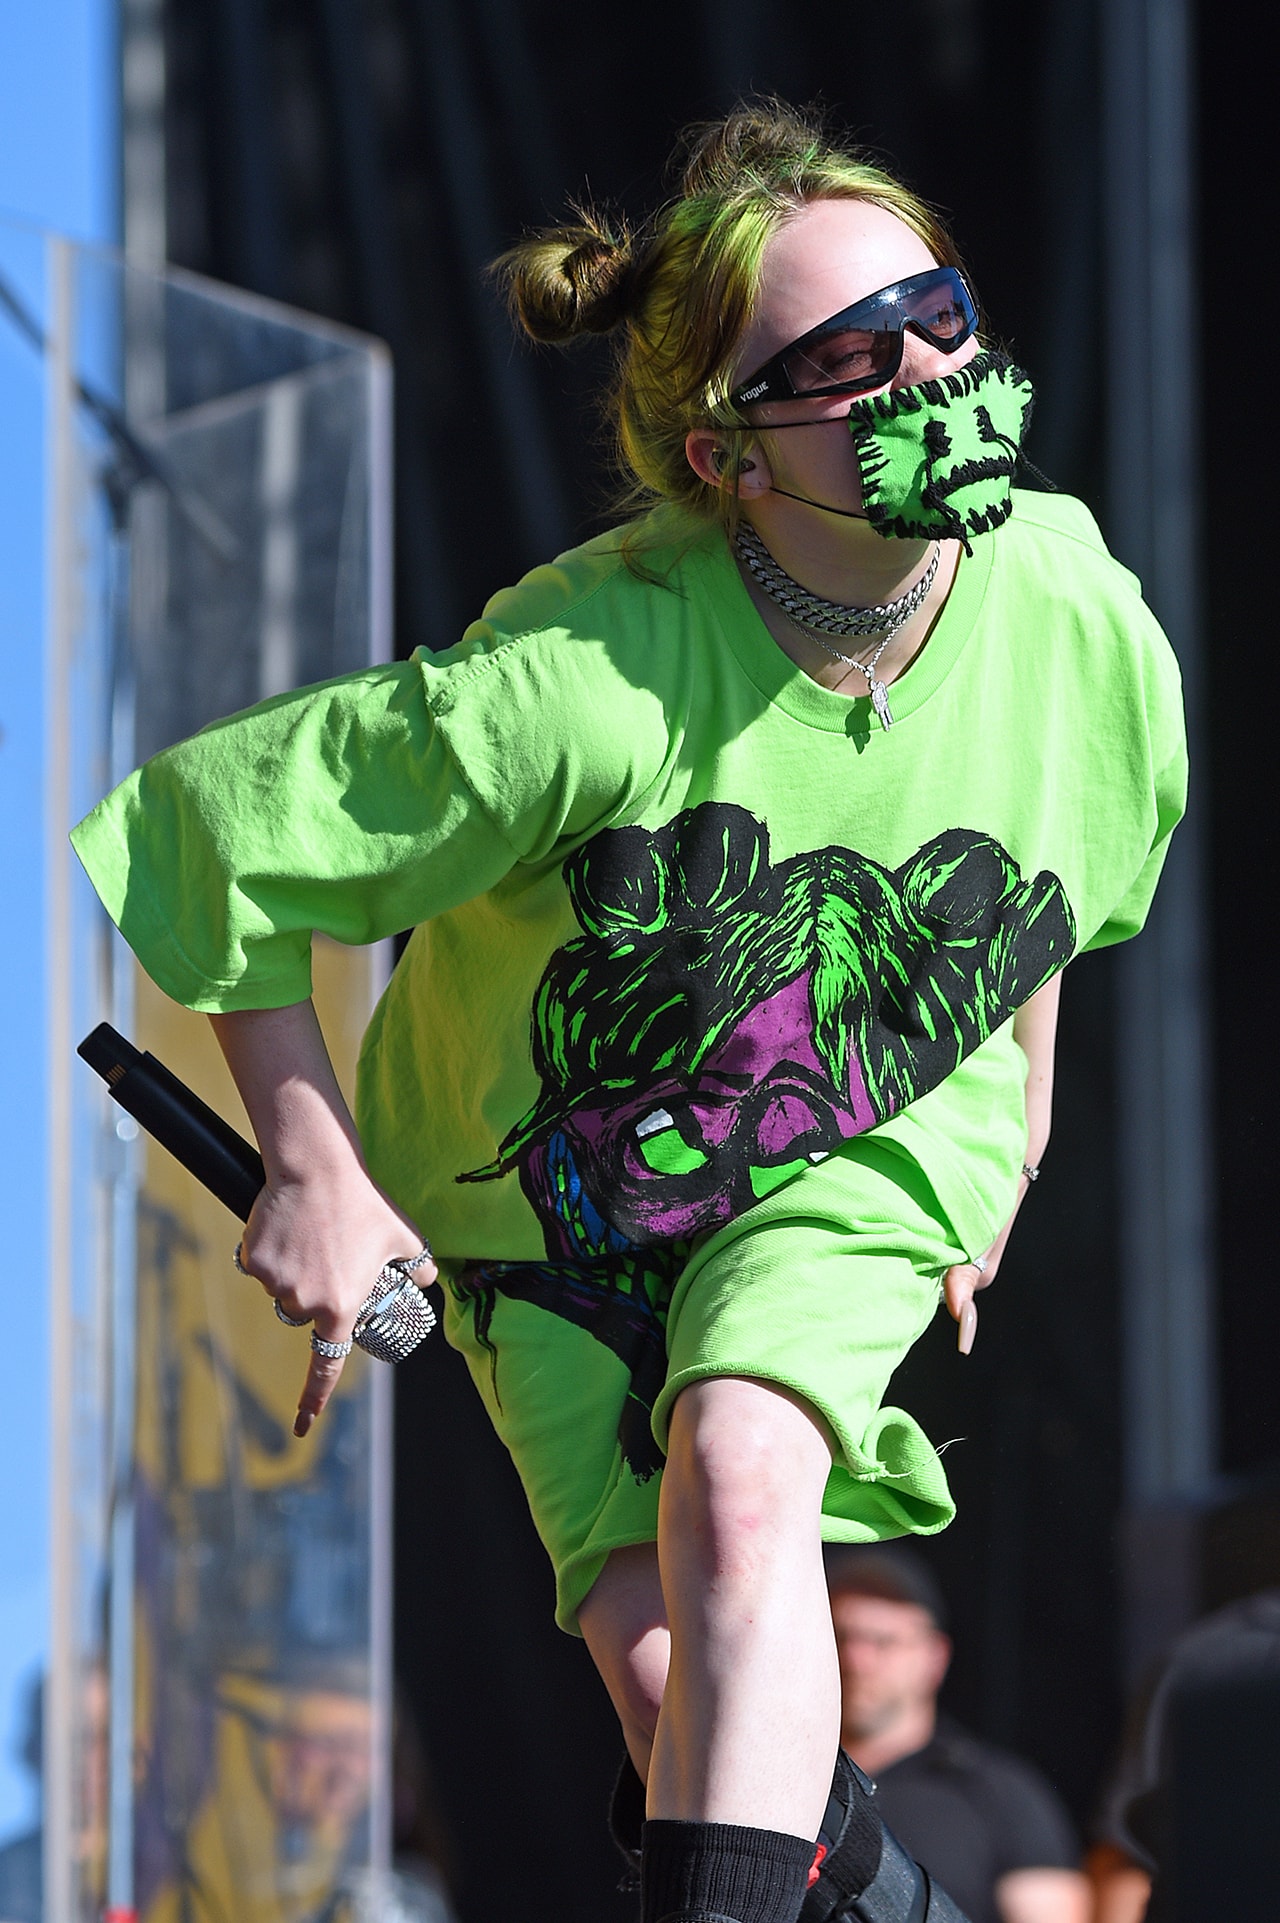 Billie Eilish Reading Festival 2019 Green T-Shirt Outfit Mask Hair Performance